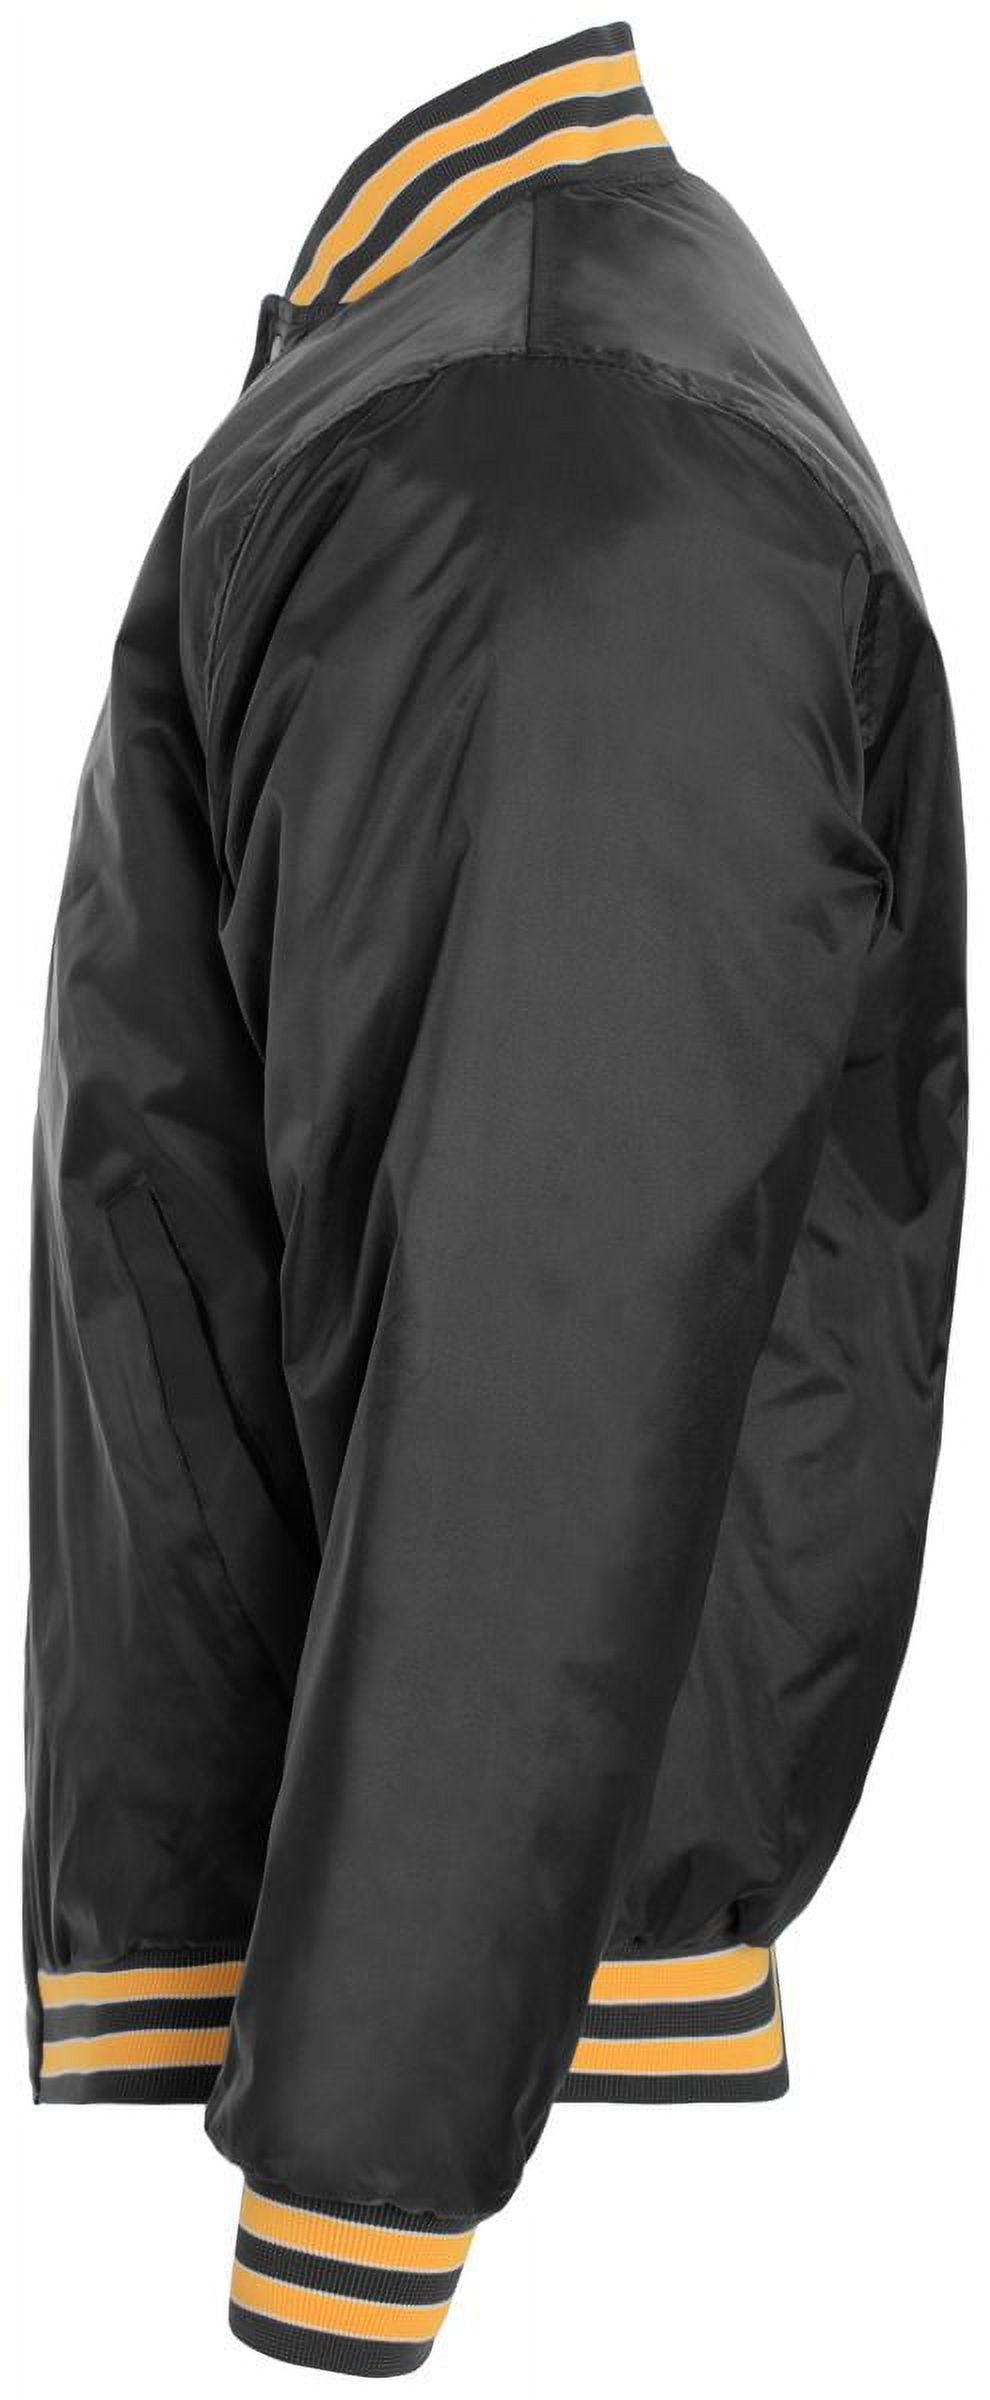 Holloway Sportswear L Heritage Jacket Black/White 229140 - image 3 of 4